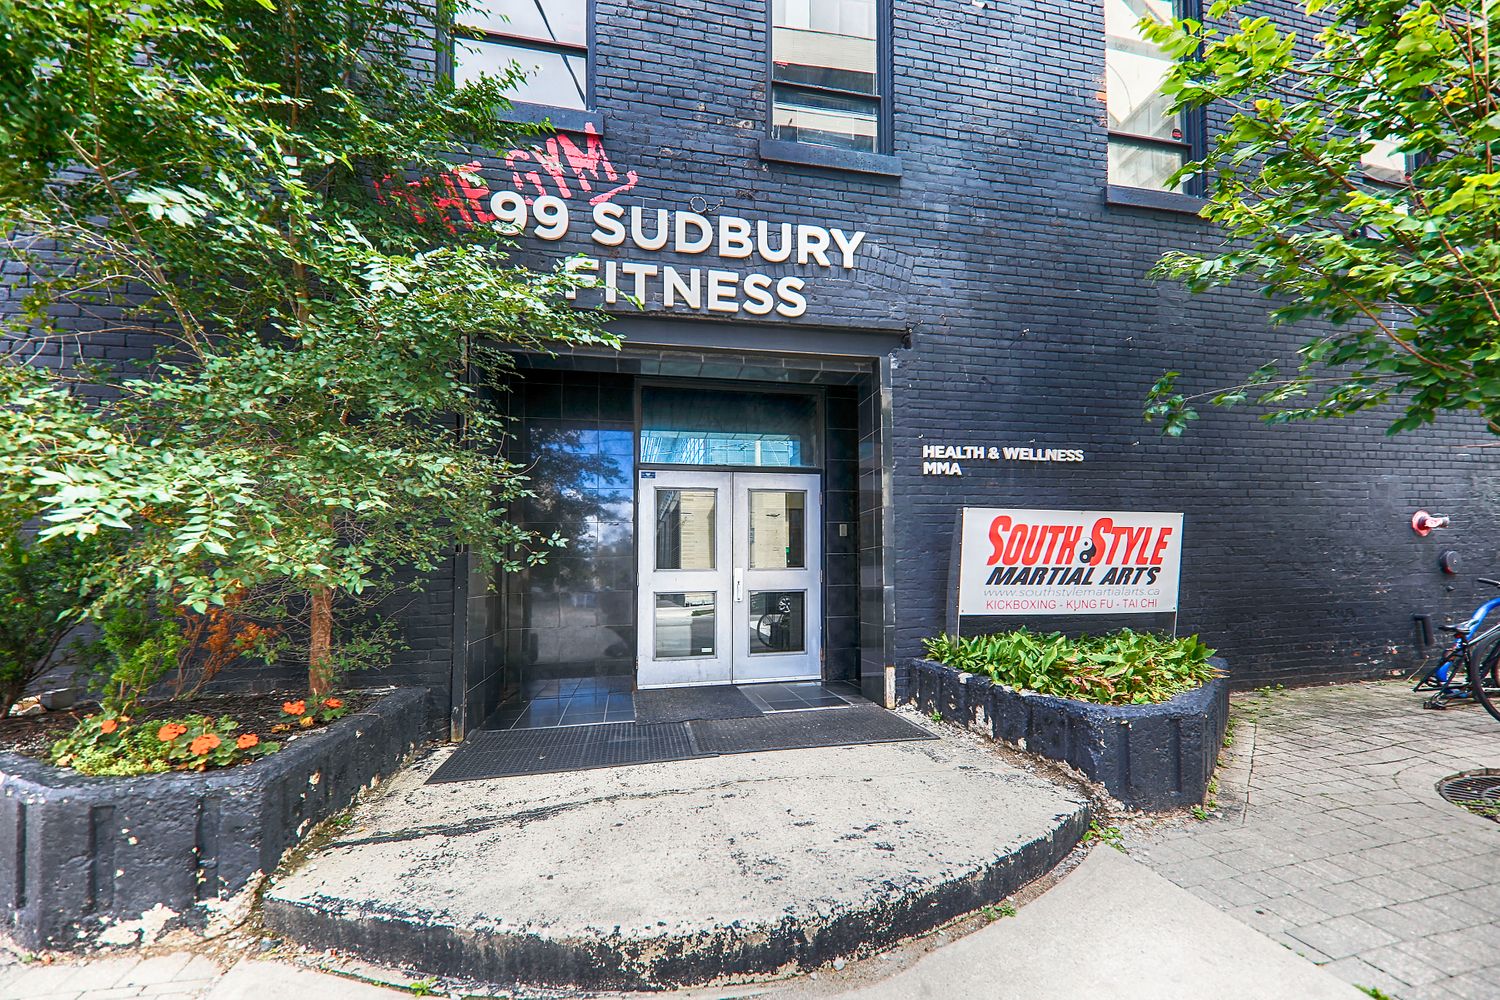 150 Sudbury Street. Westside Gallery Lofts is located in  West End, Toronto - image #6 of 6